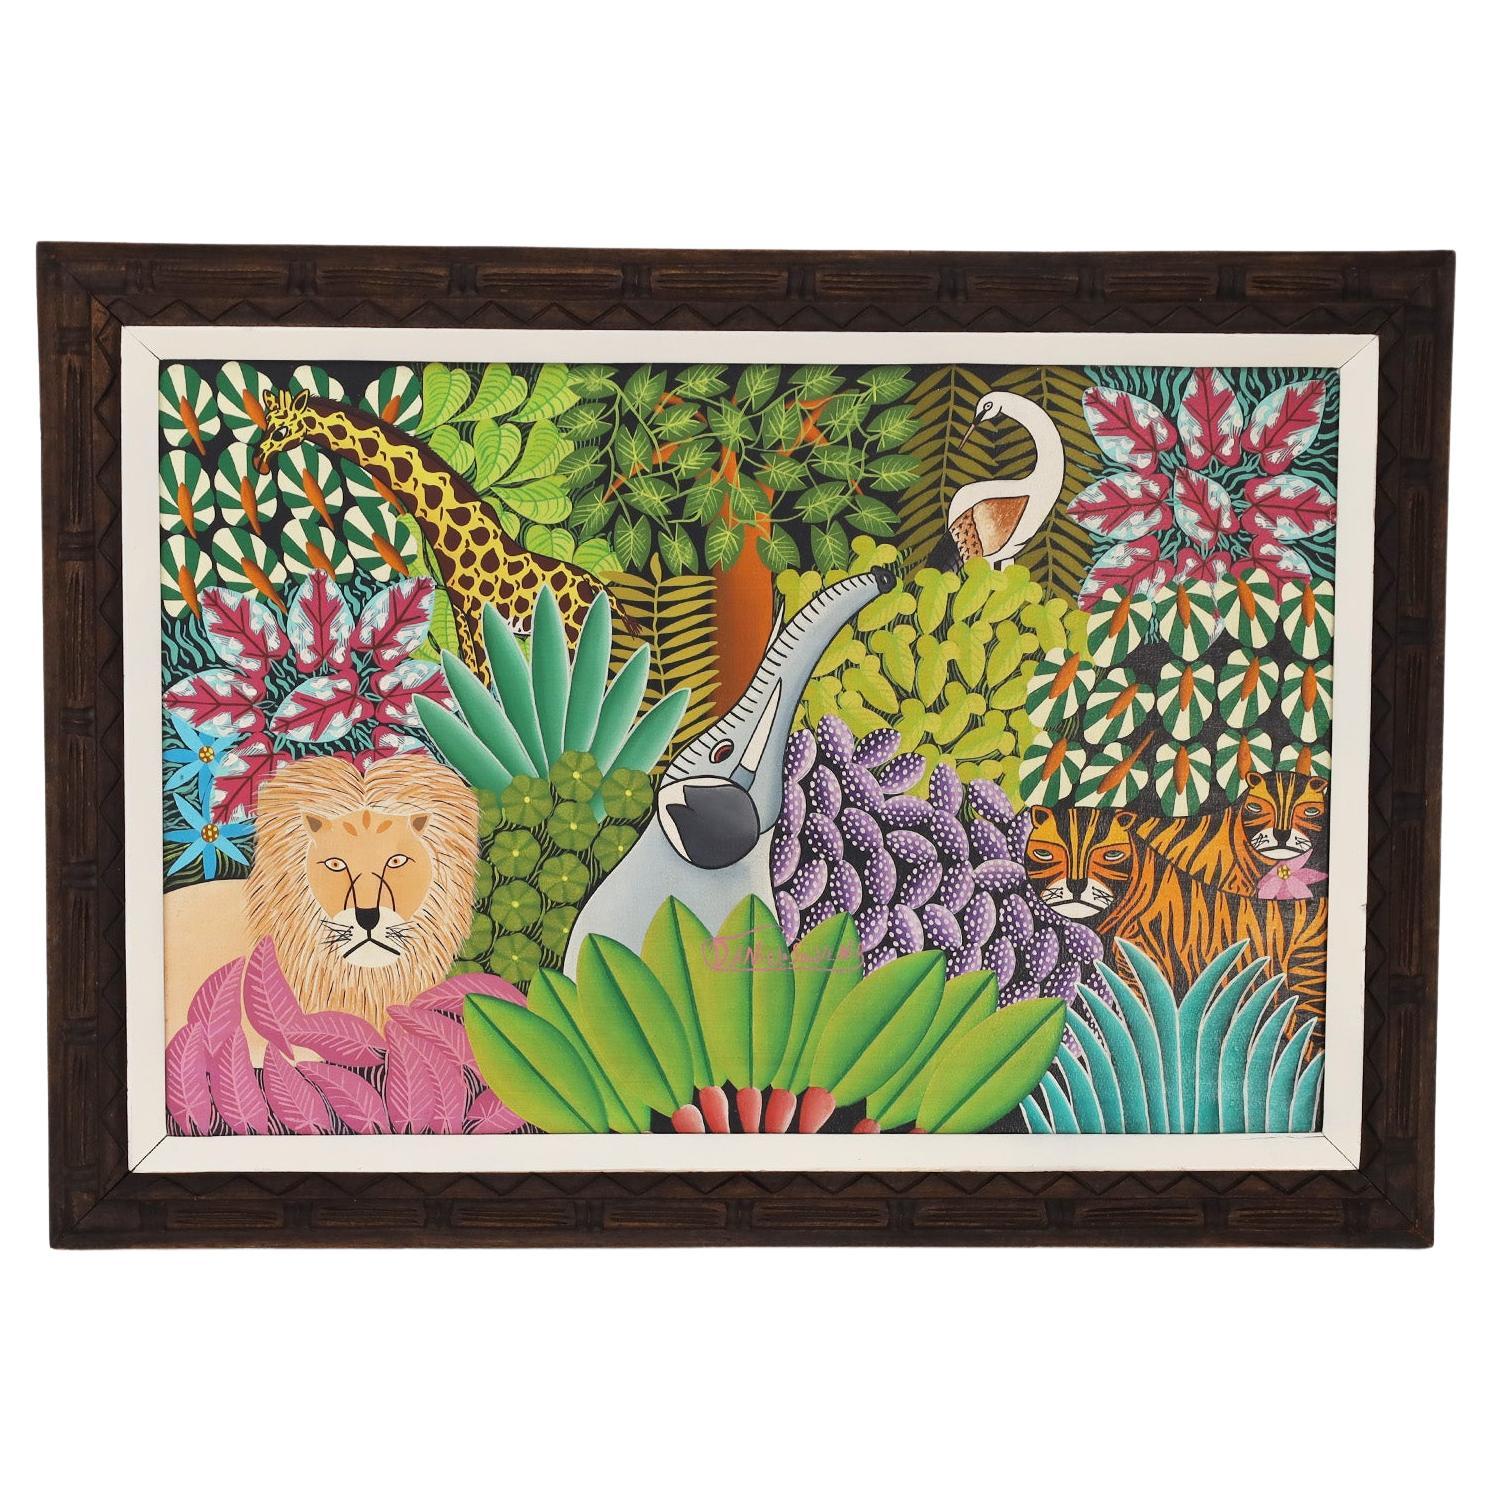 Tropical Haitian Jungle Painting by Daniel Souvenir